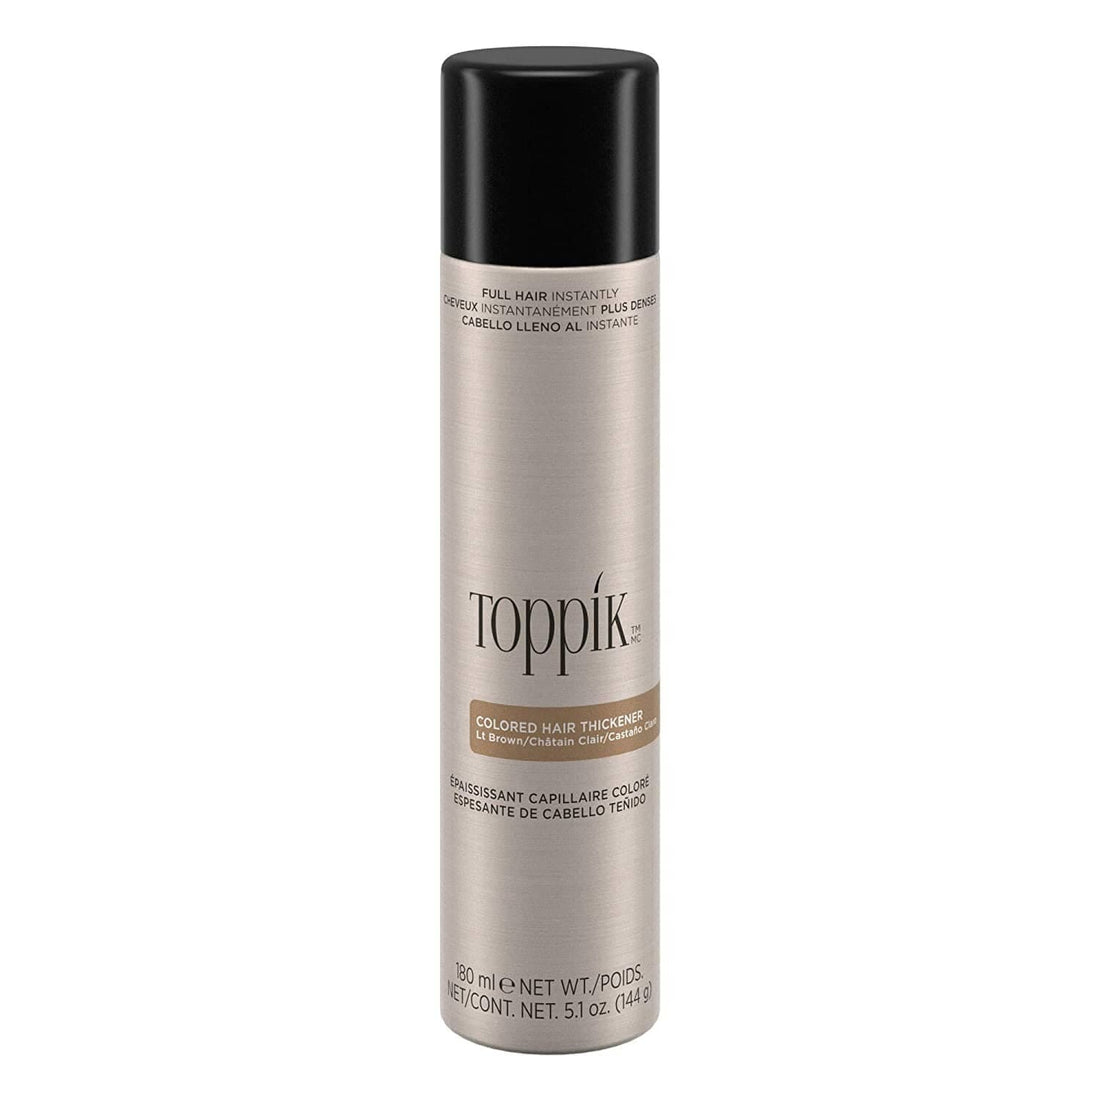 Toppik Colored Hair Thickener - LIGHT BROWN Toppik 5.1 oz/144g bottle Shop at Skin Type Solutions